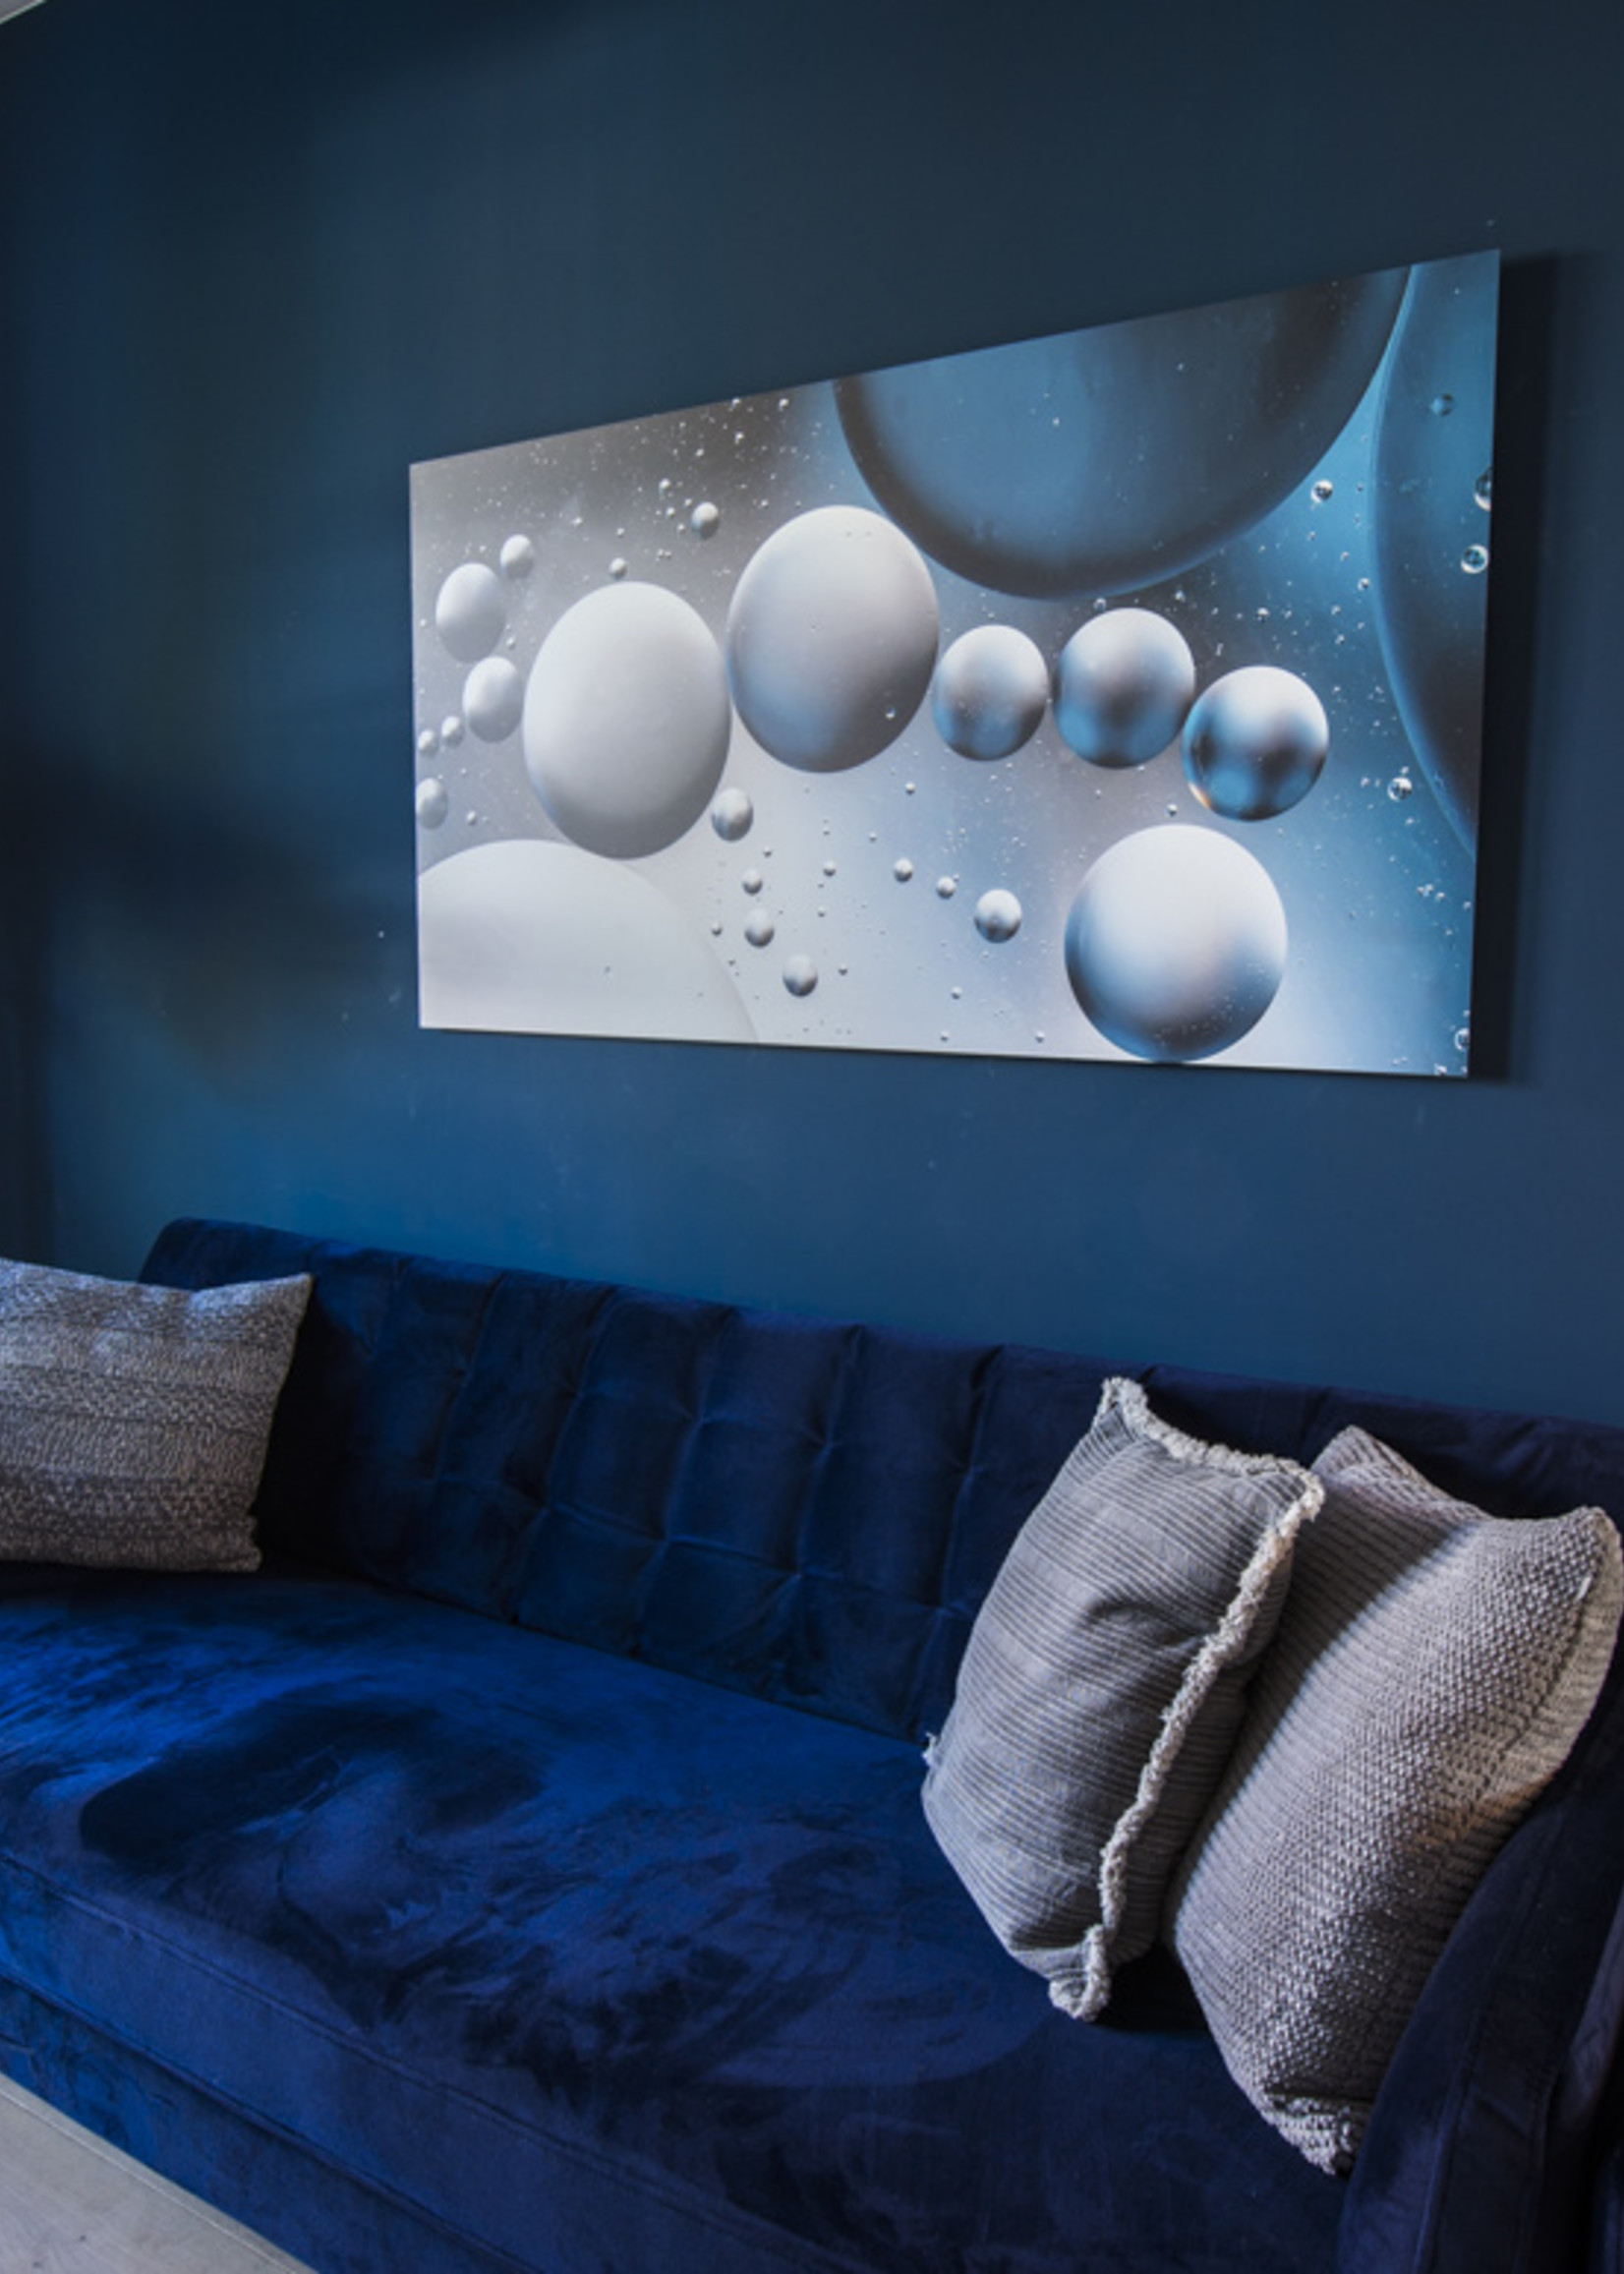 Frans van Steijn Wall photo "Art Deep blue" Aluminum on Dibond 120 cm